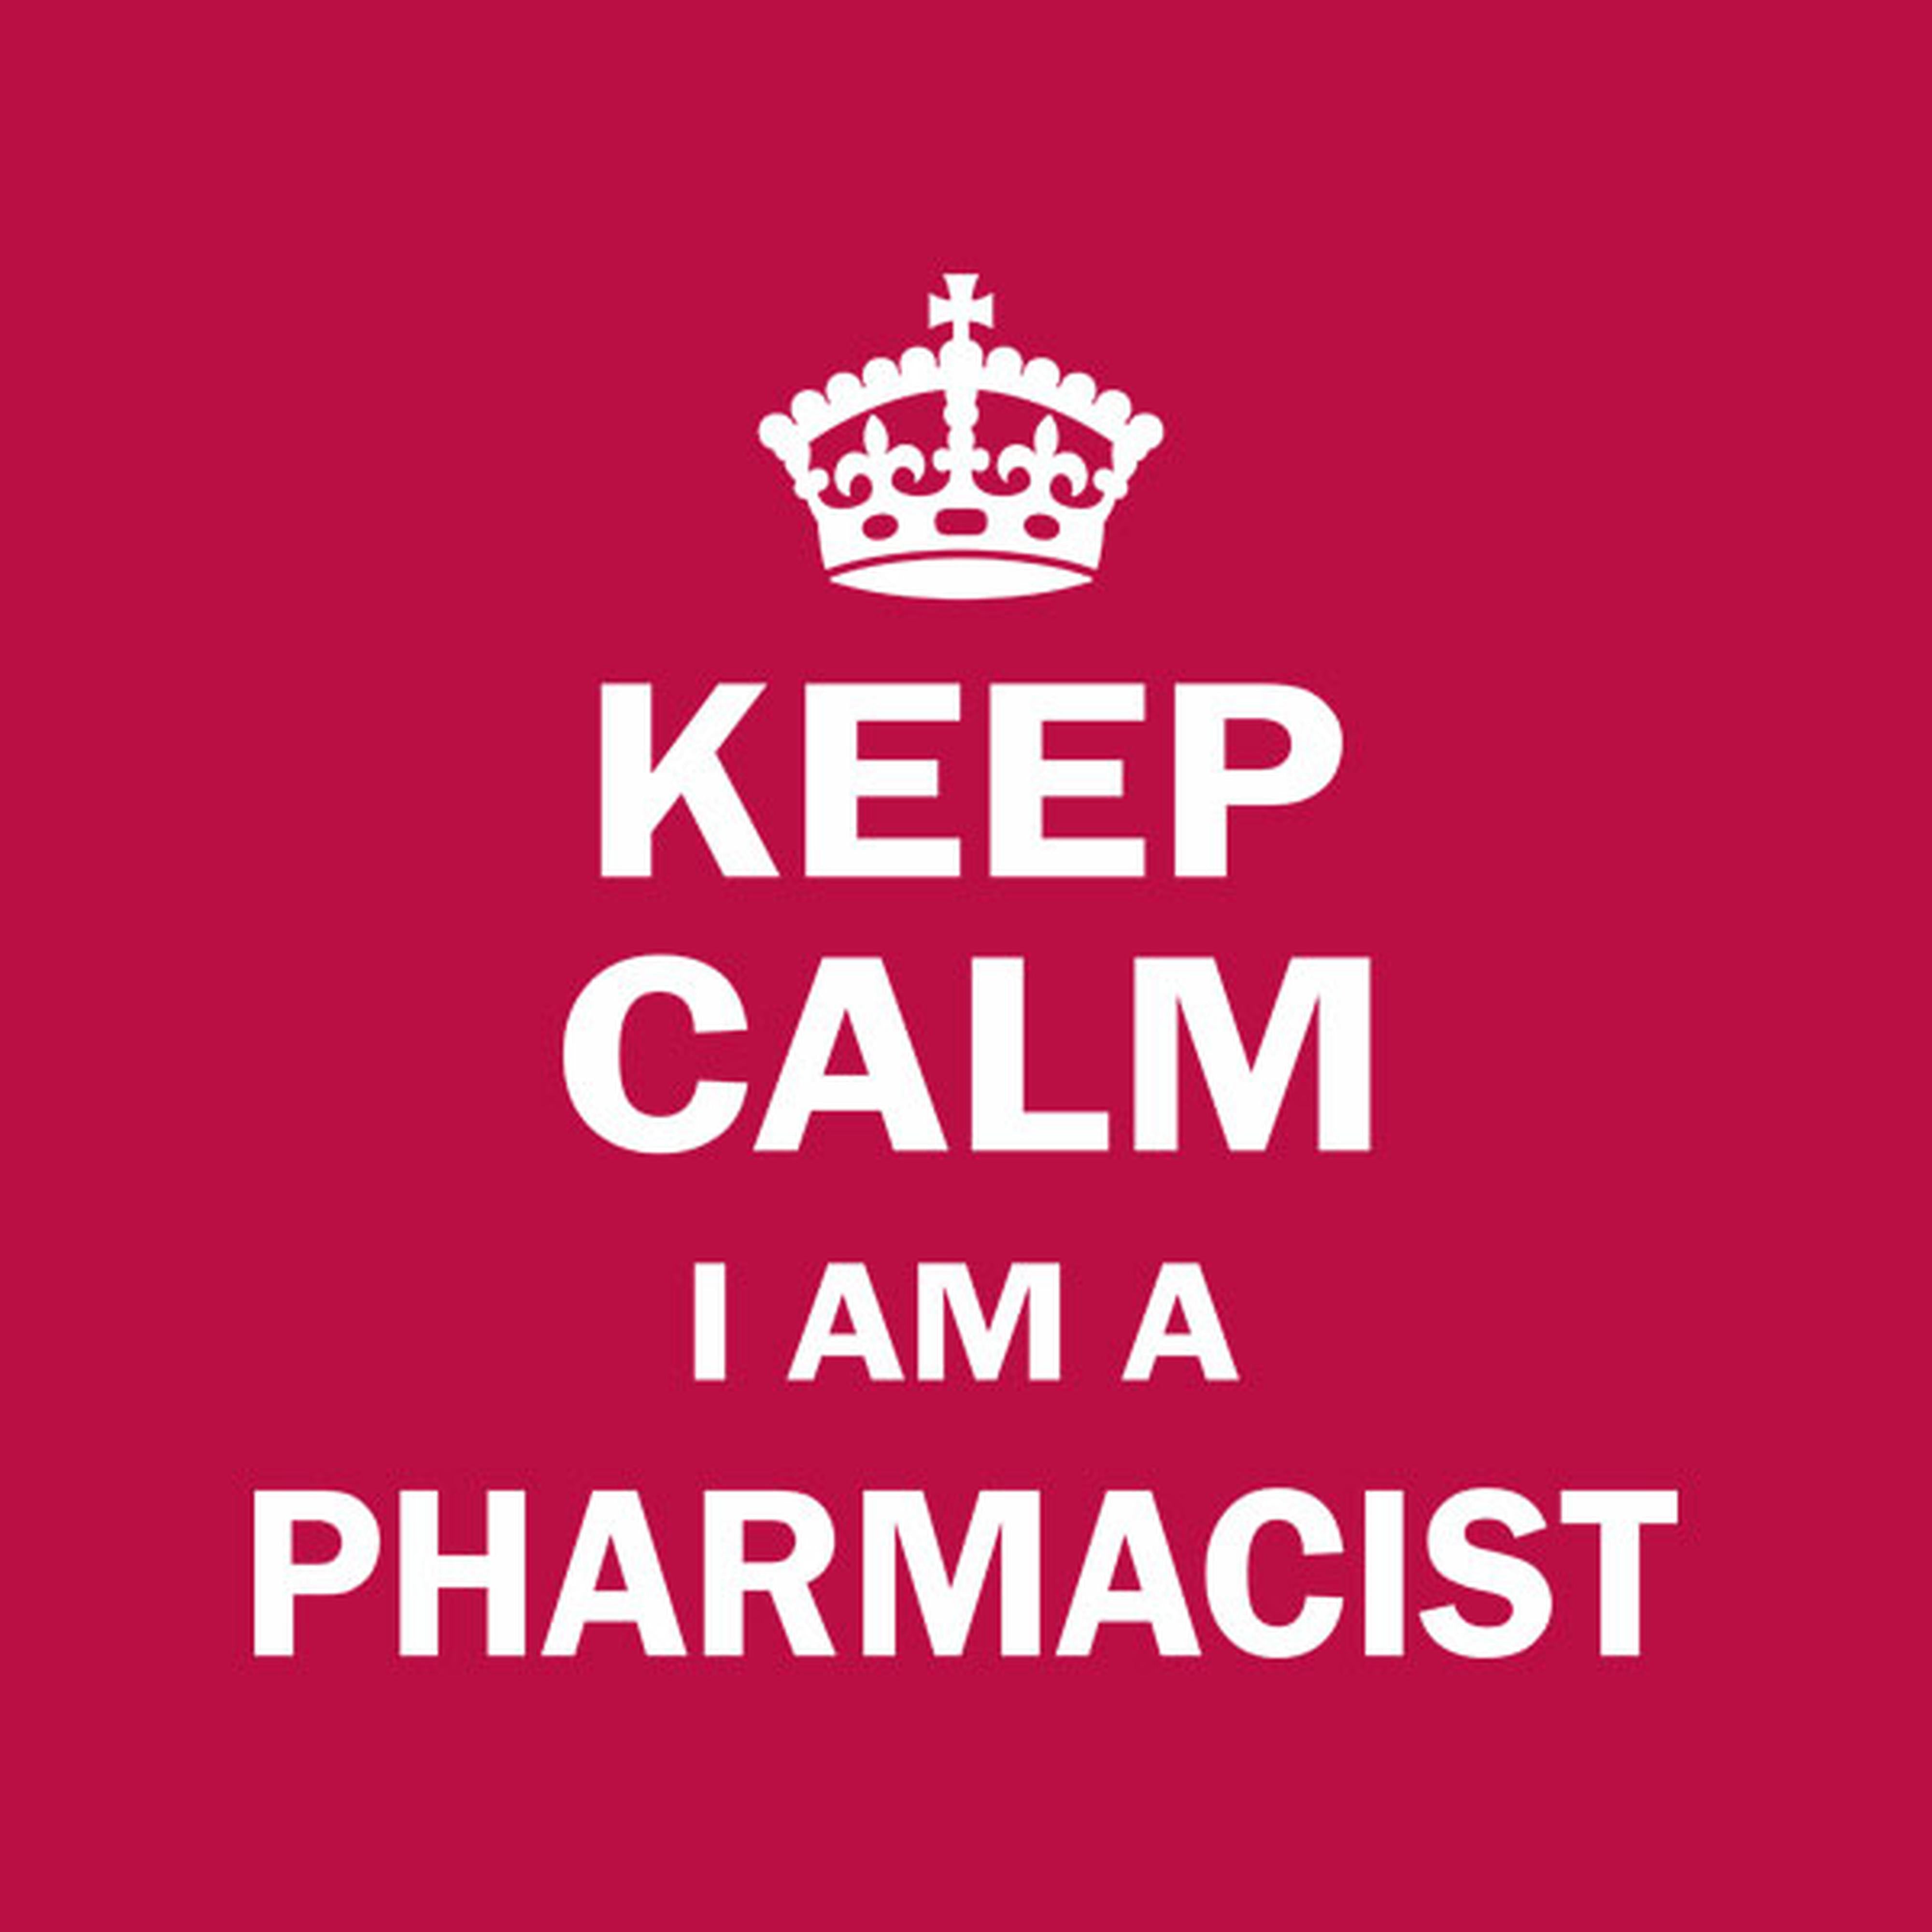 Keep calm I am a pharmacist - T-shirt